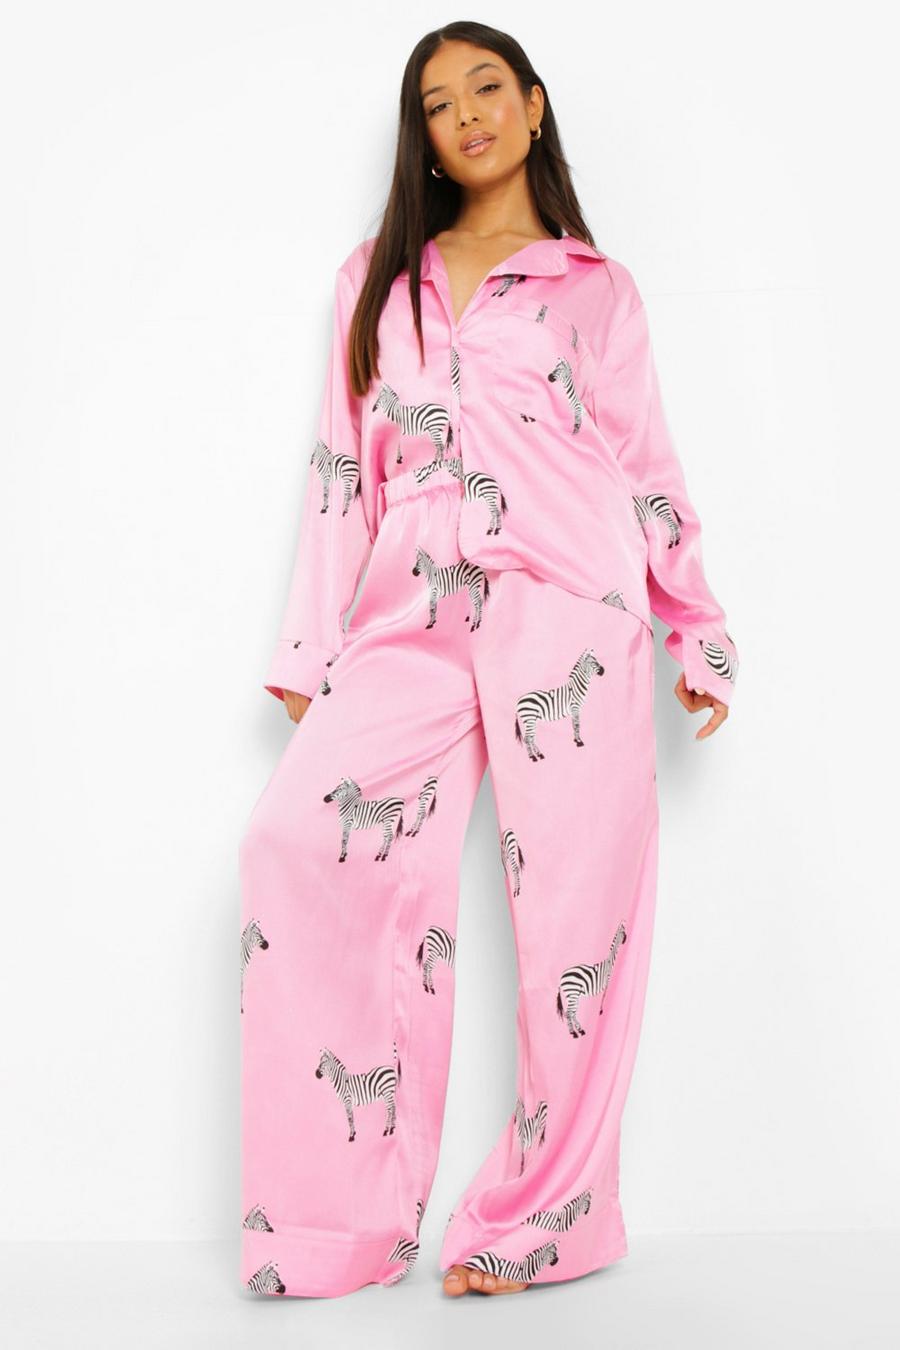 Petite Pyjama-Hose mit Zebra-Print, Hot pink rose